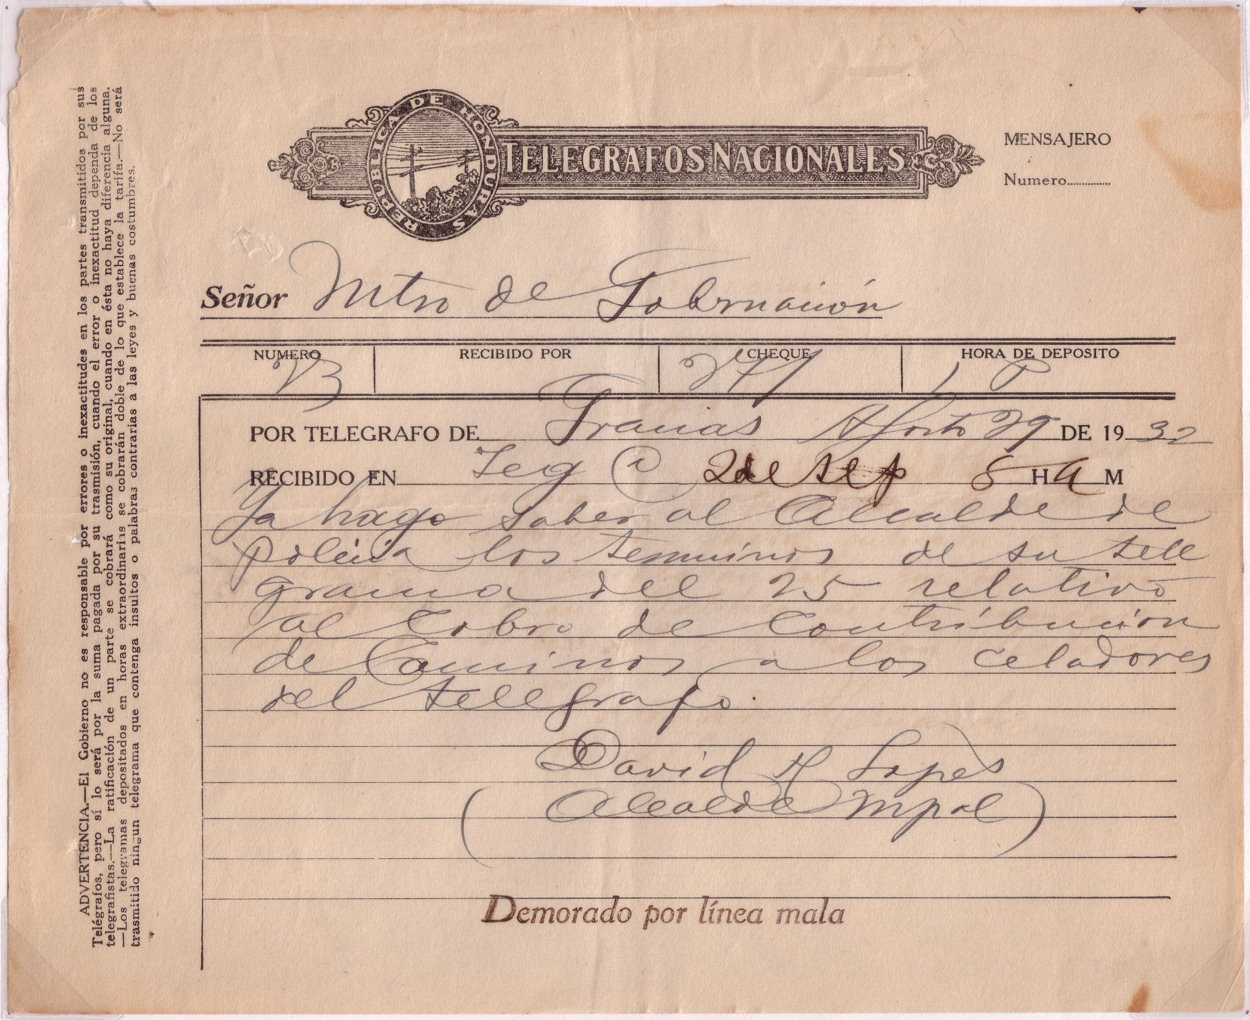 Telegram of 29 August 1932